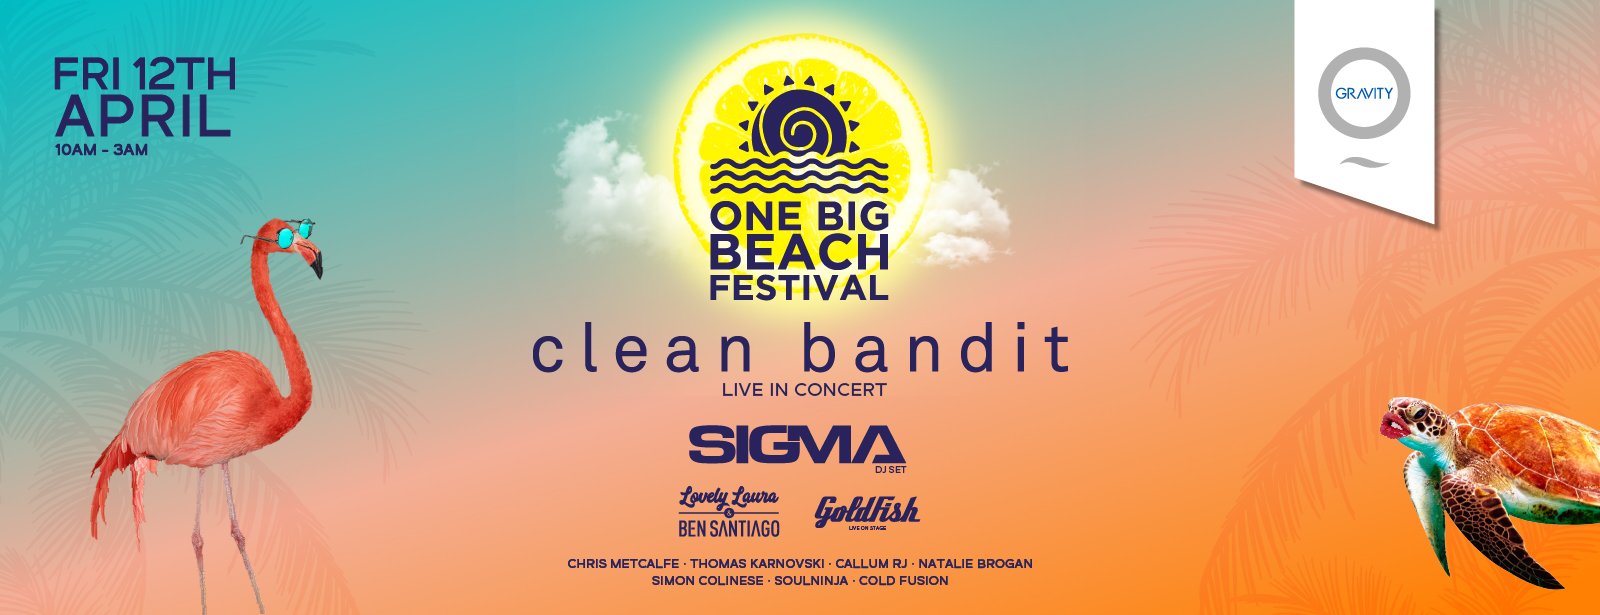 One Big Beach Festival - Coming Soon in UAE